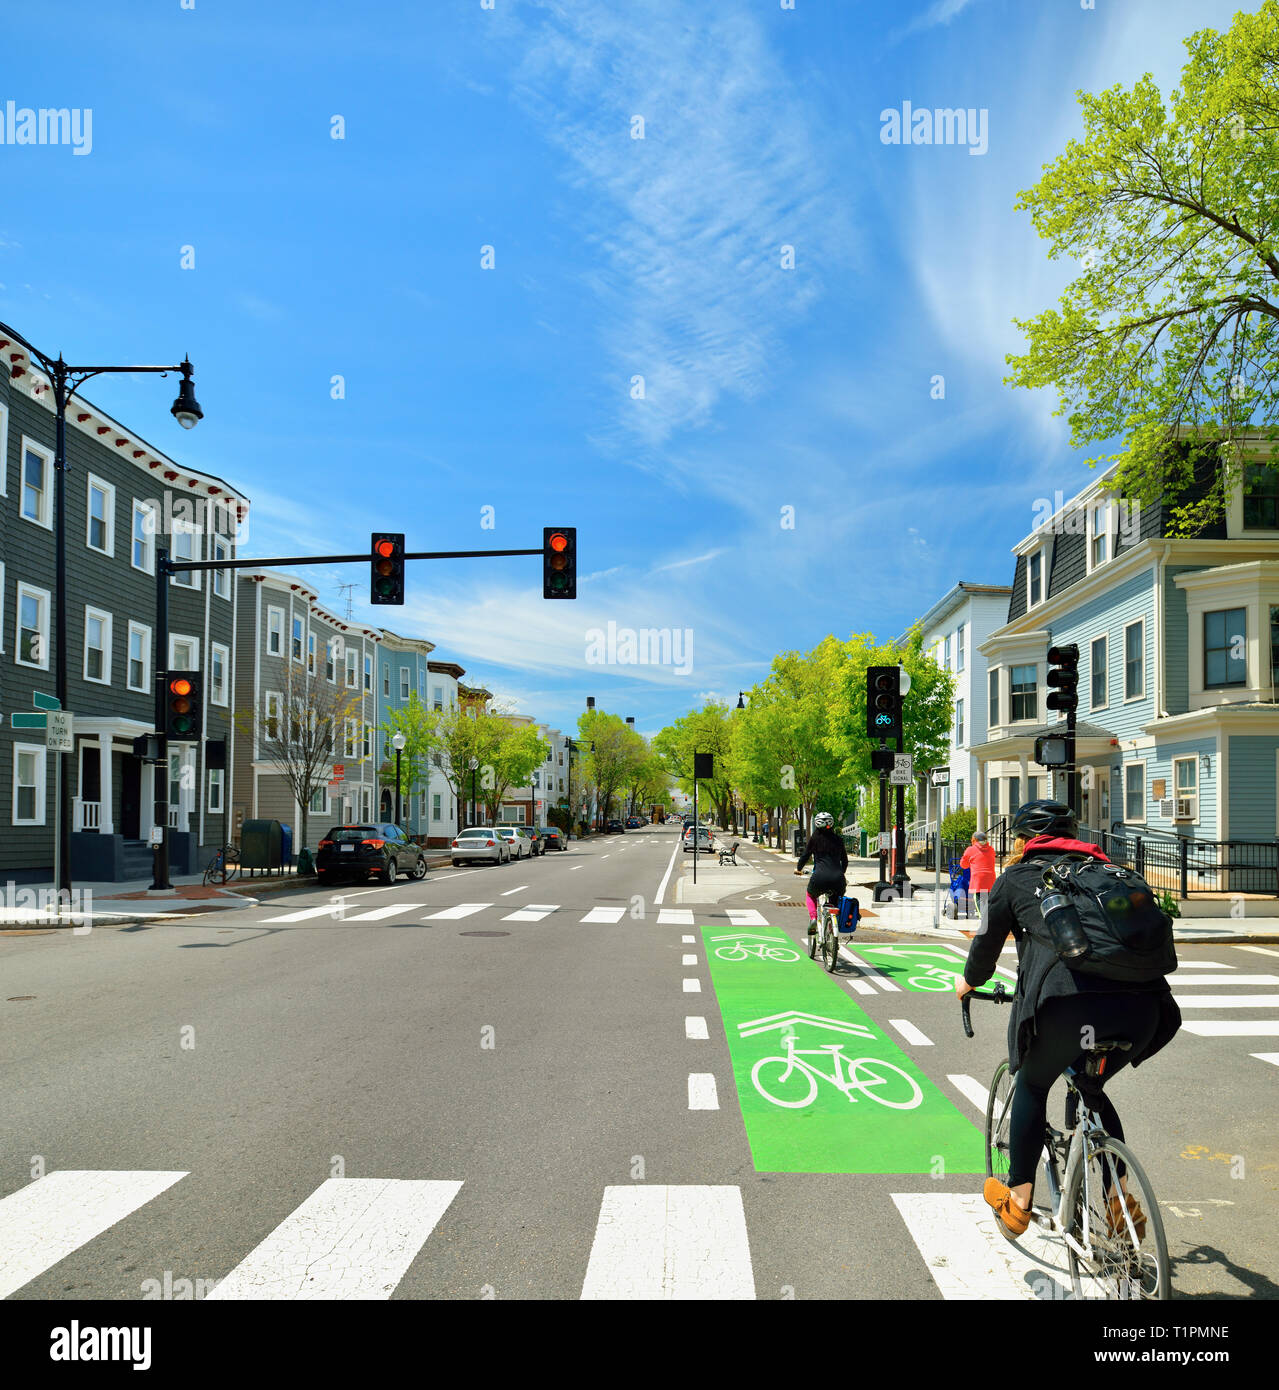 Protected bike lane between parking lane and sidewalk on city street. Bikers conmuting on nice spring day. Stock Photo